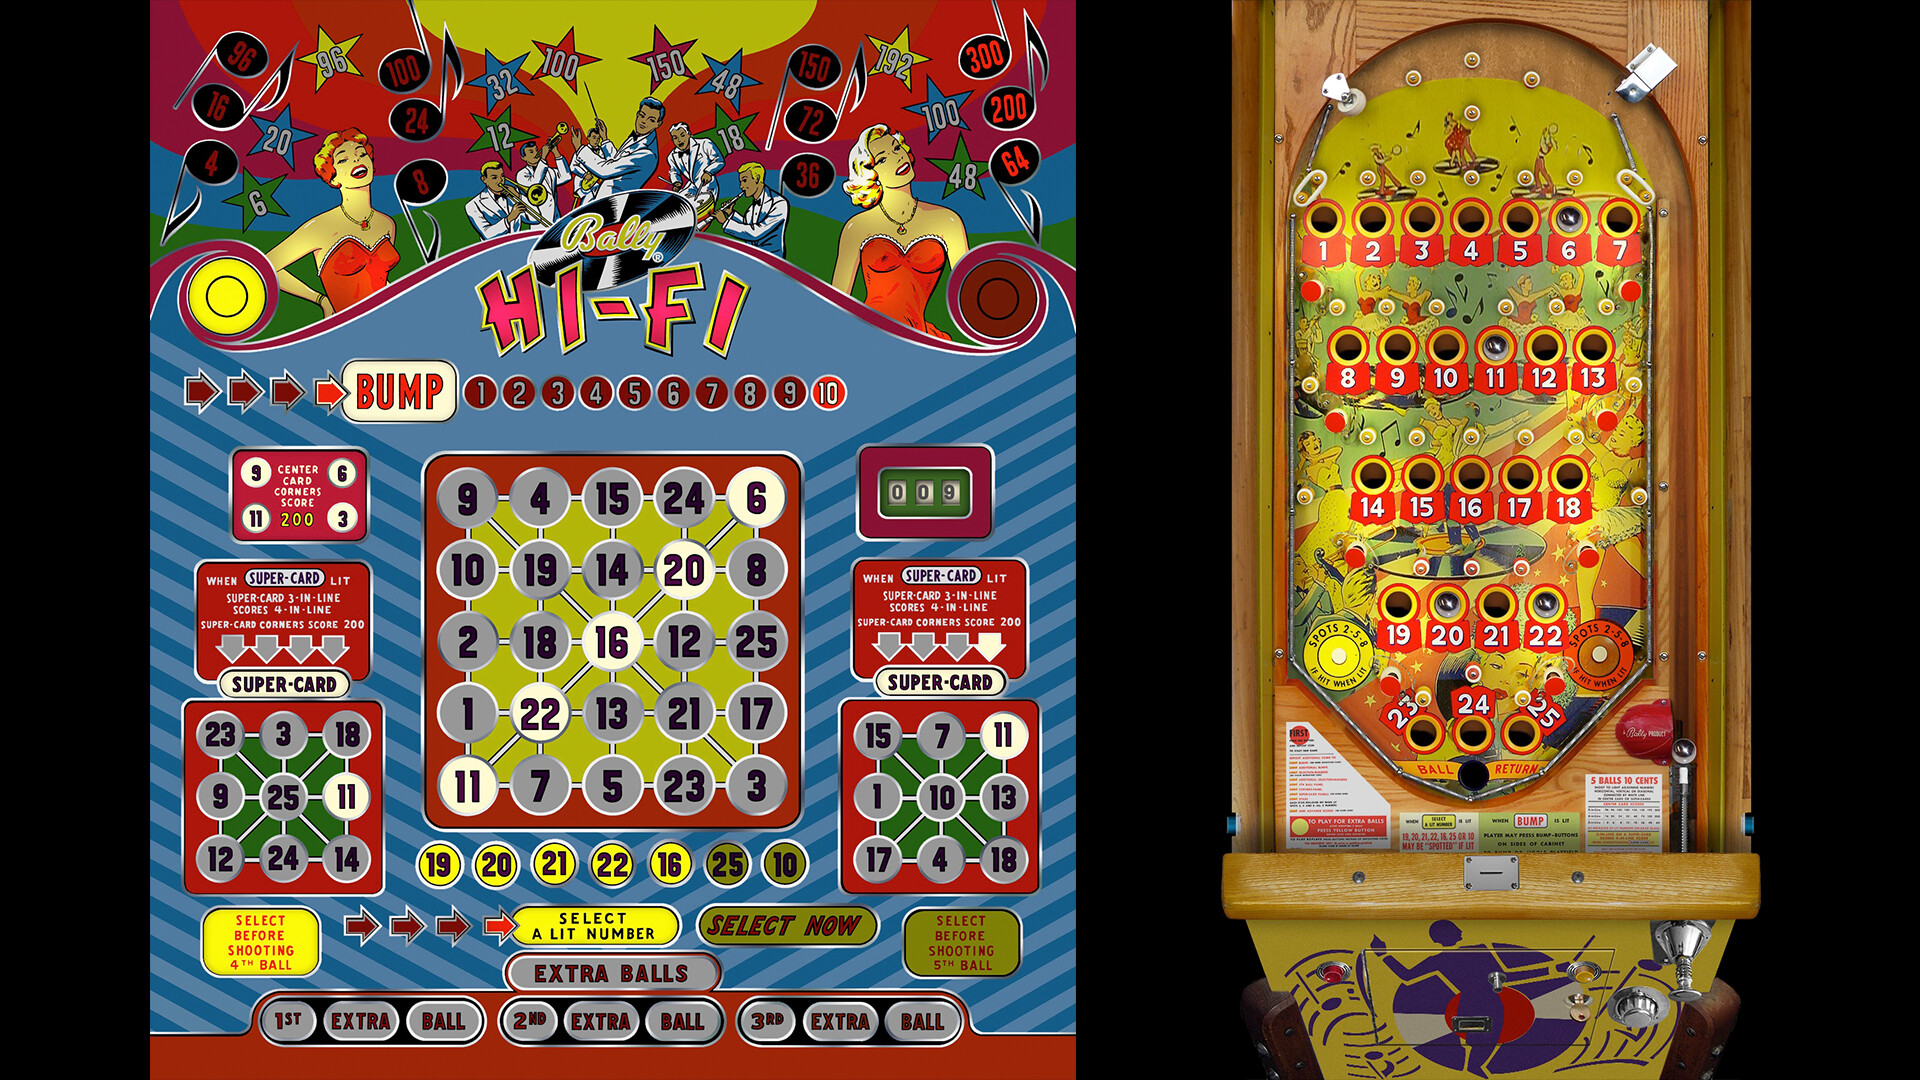 Bingo Pinball Gameroom - Bally Hi Fi Featured Screenshot #1